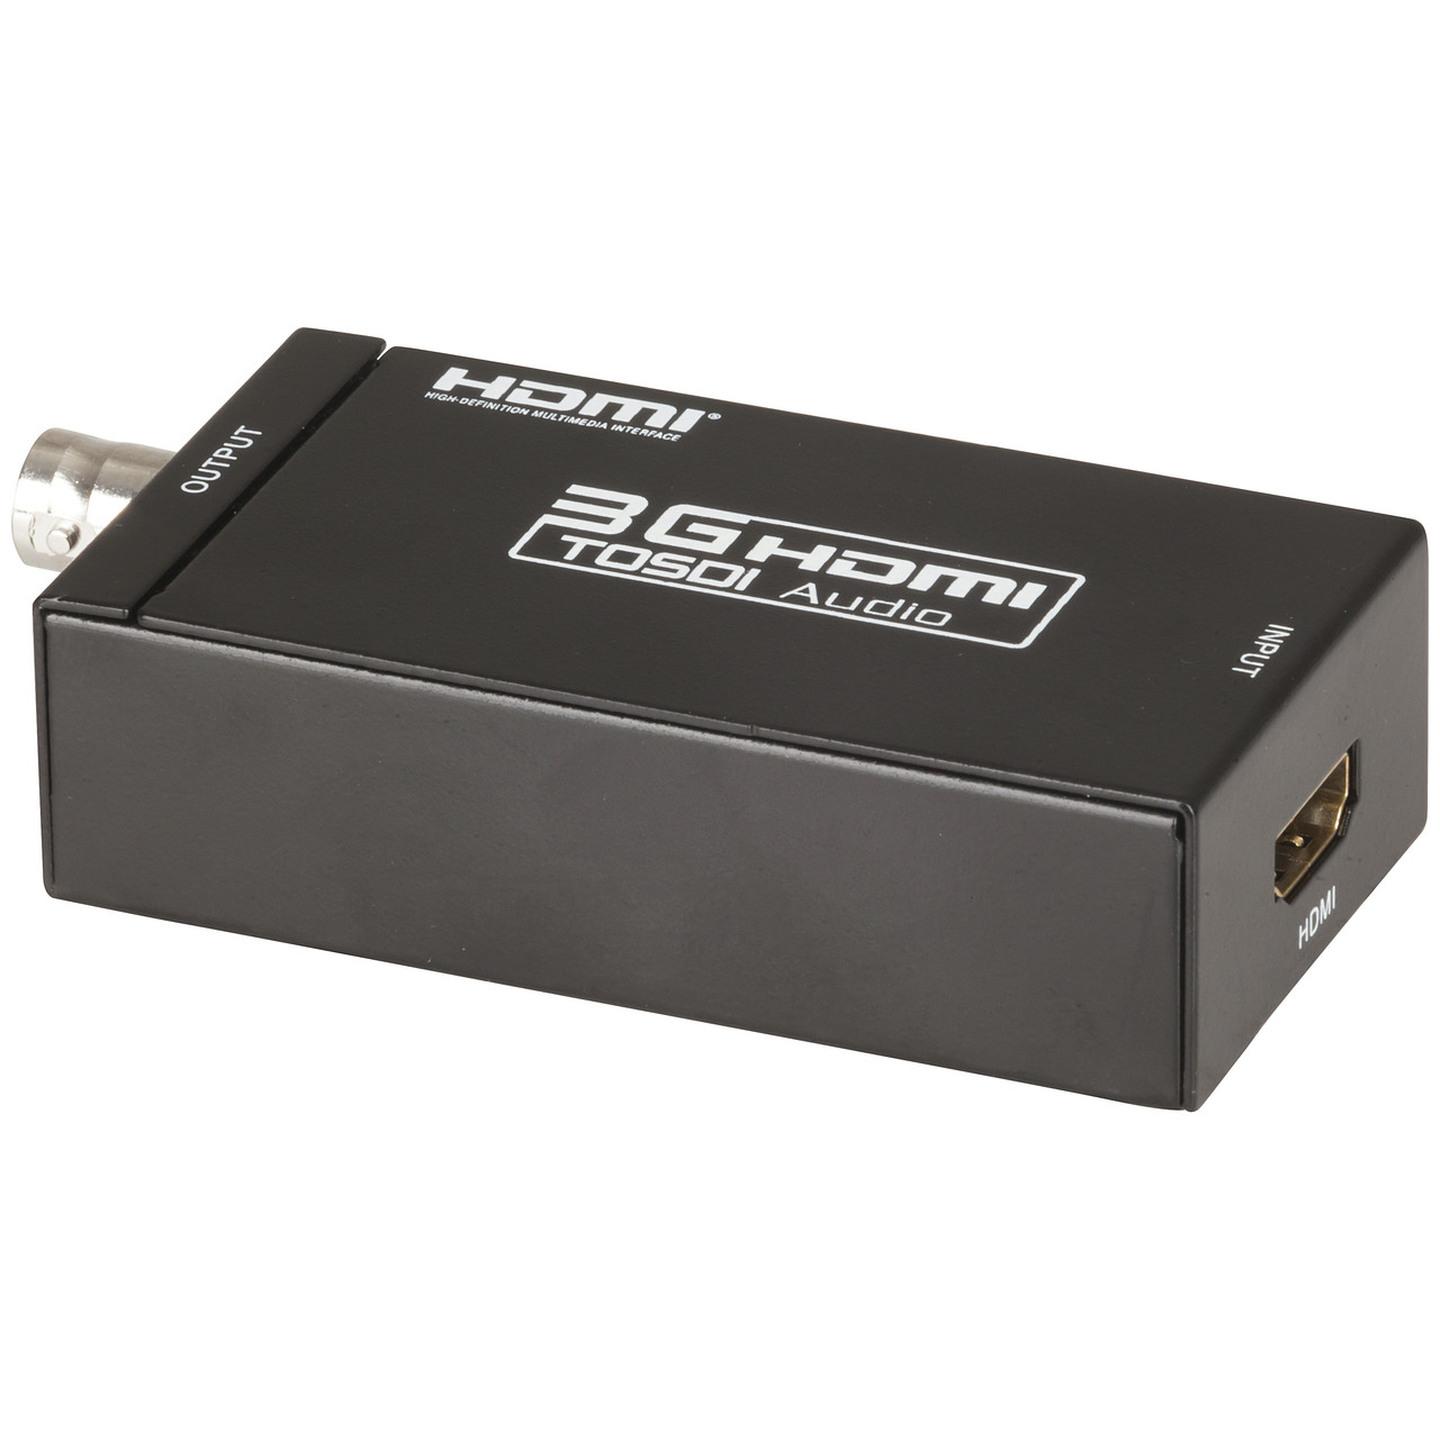 HDMI to 3G SDI Converter